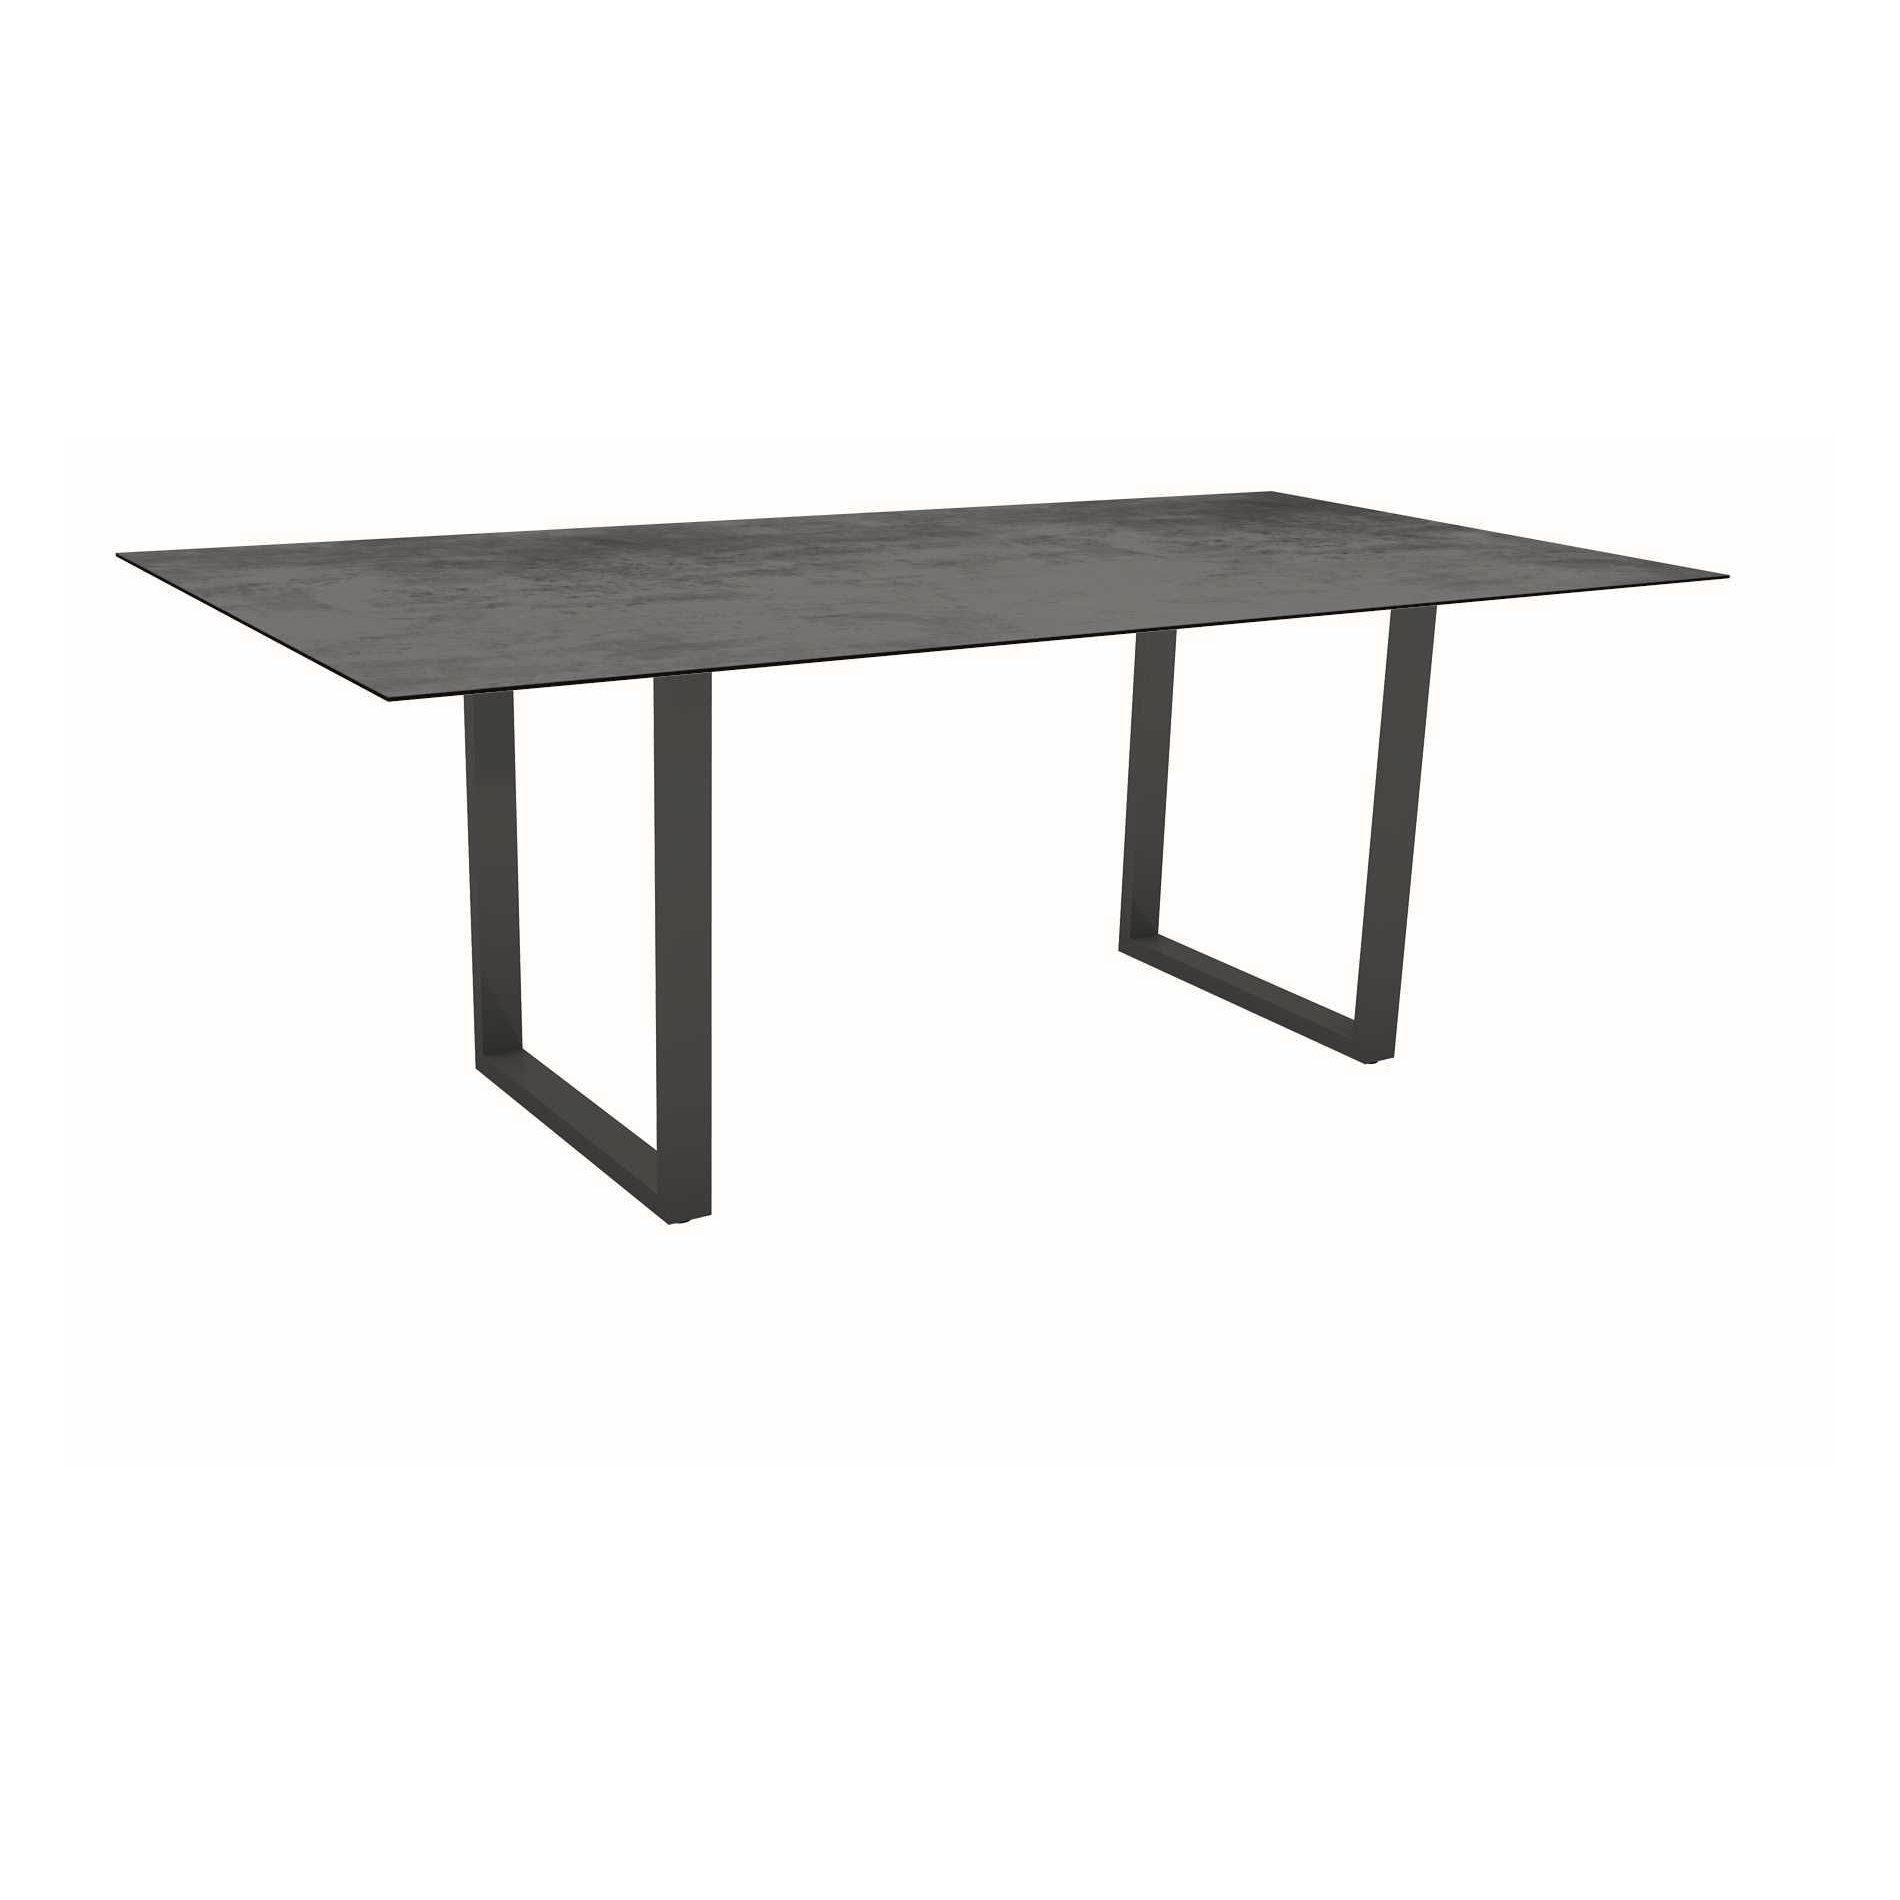 Stern Kufentisch, Maße: 200x100x73 cm, Gestell Aluminium anthrazit, Tischplatte HPL Zement